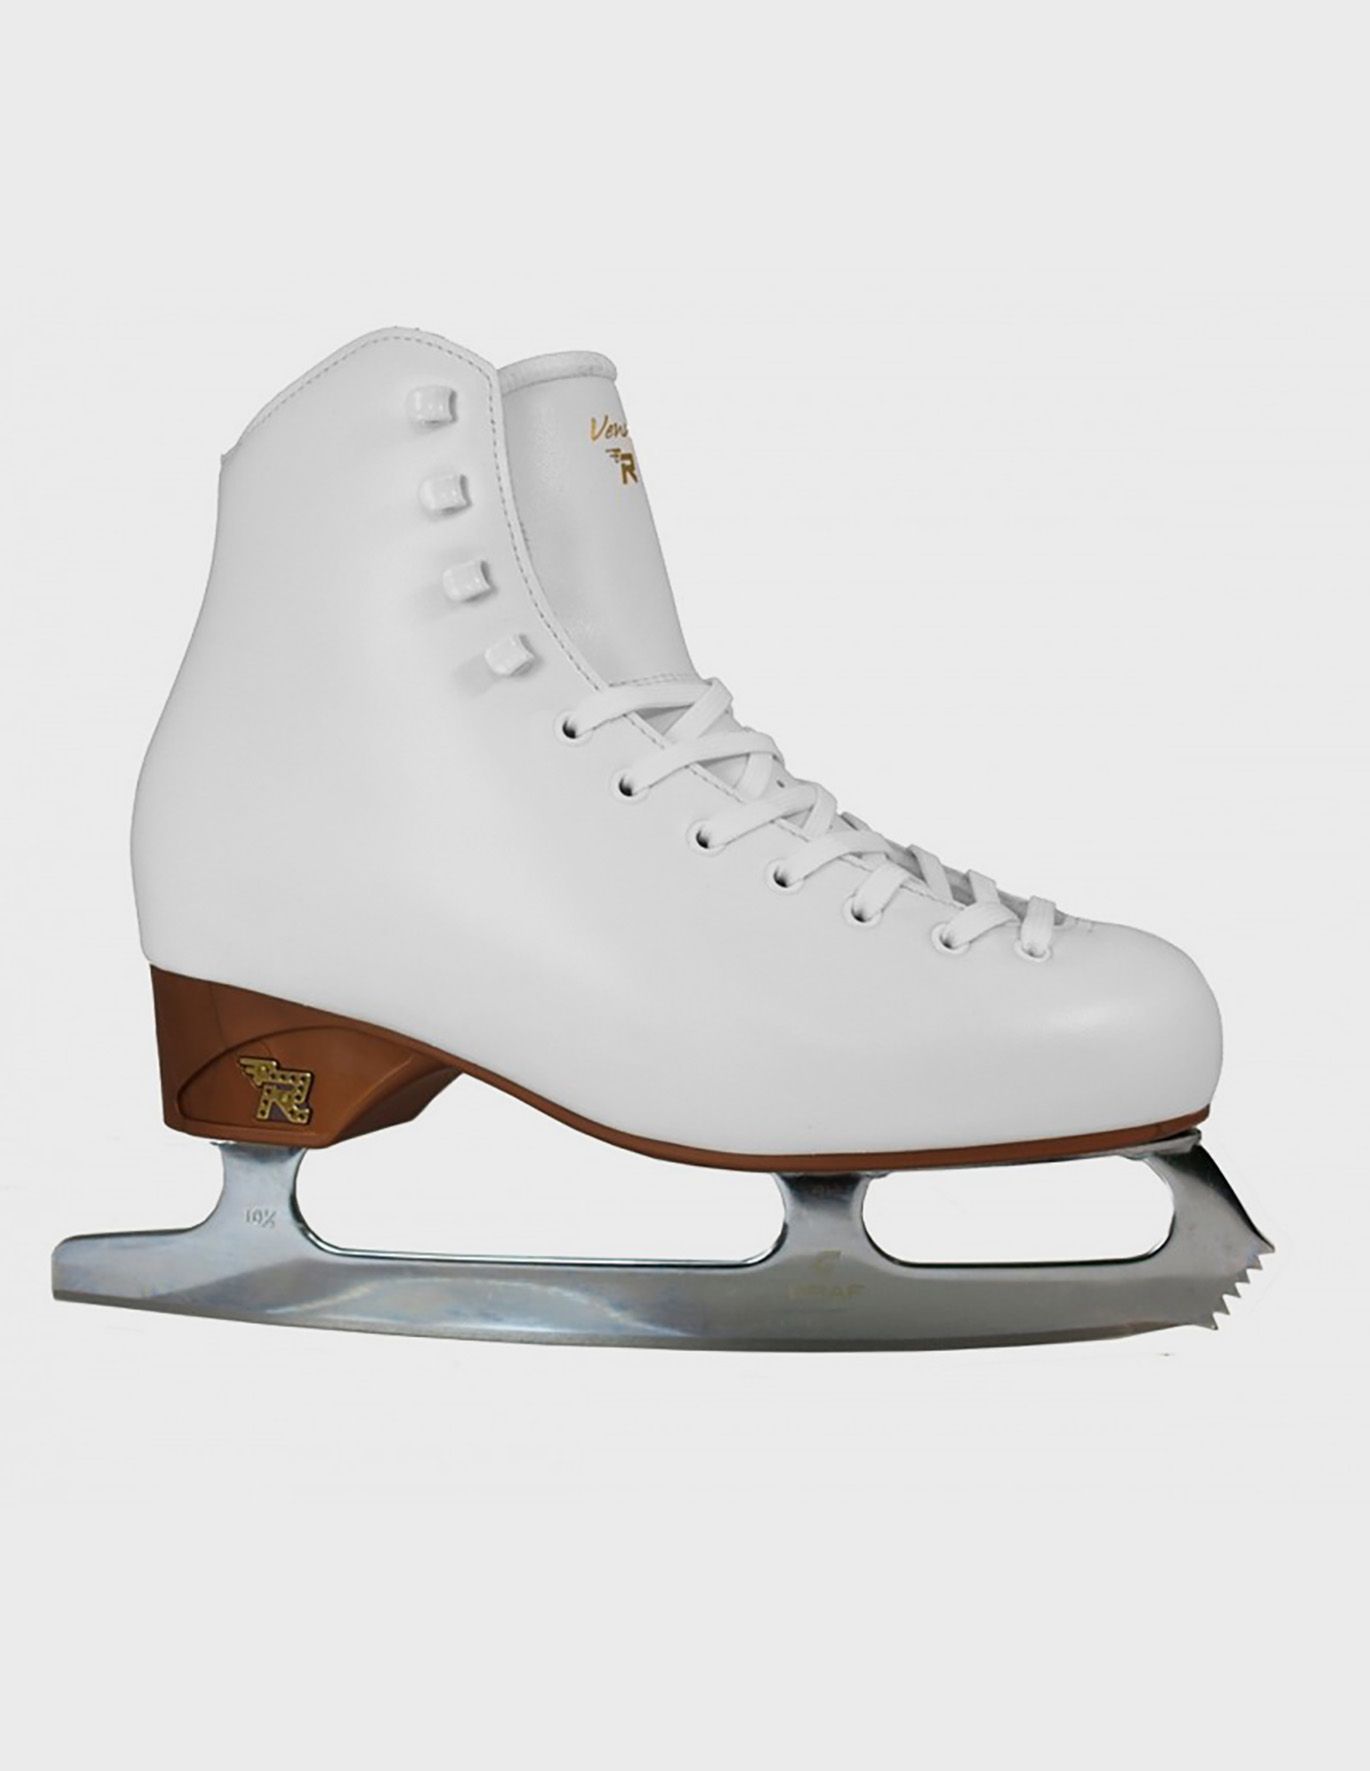 Risport Venus Ice Skates with A4 Blades